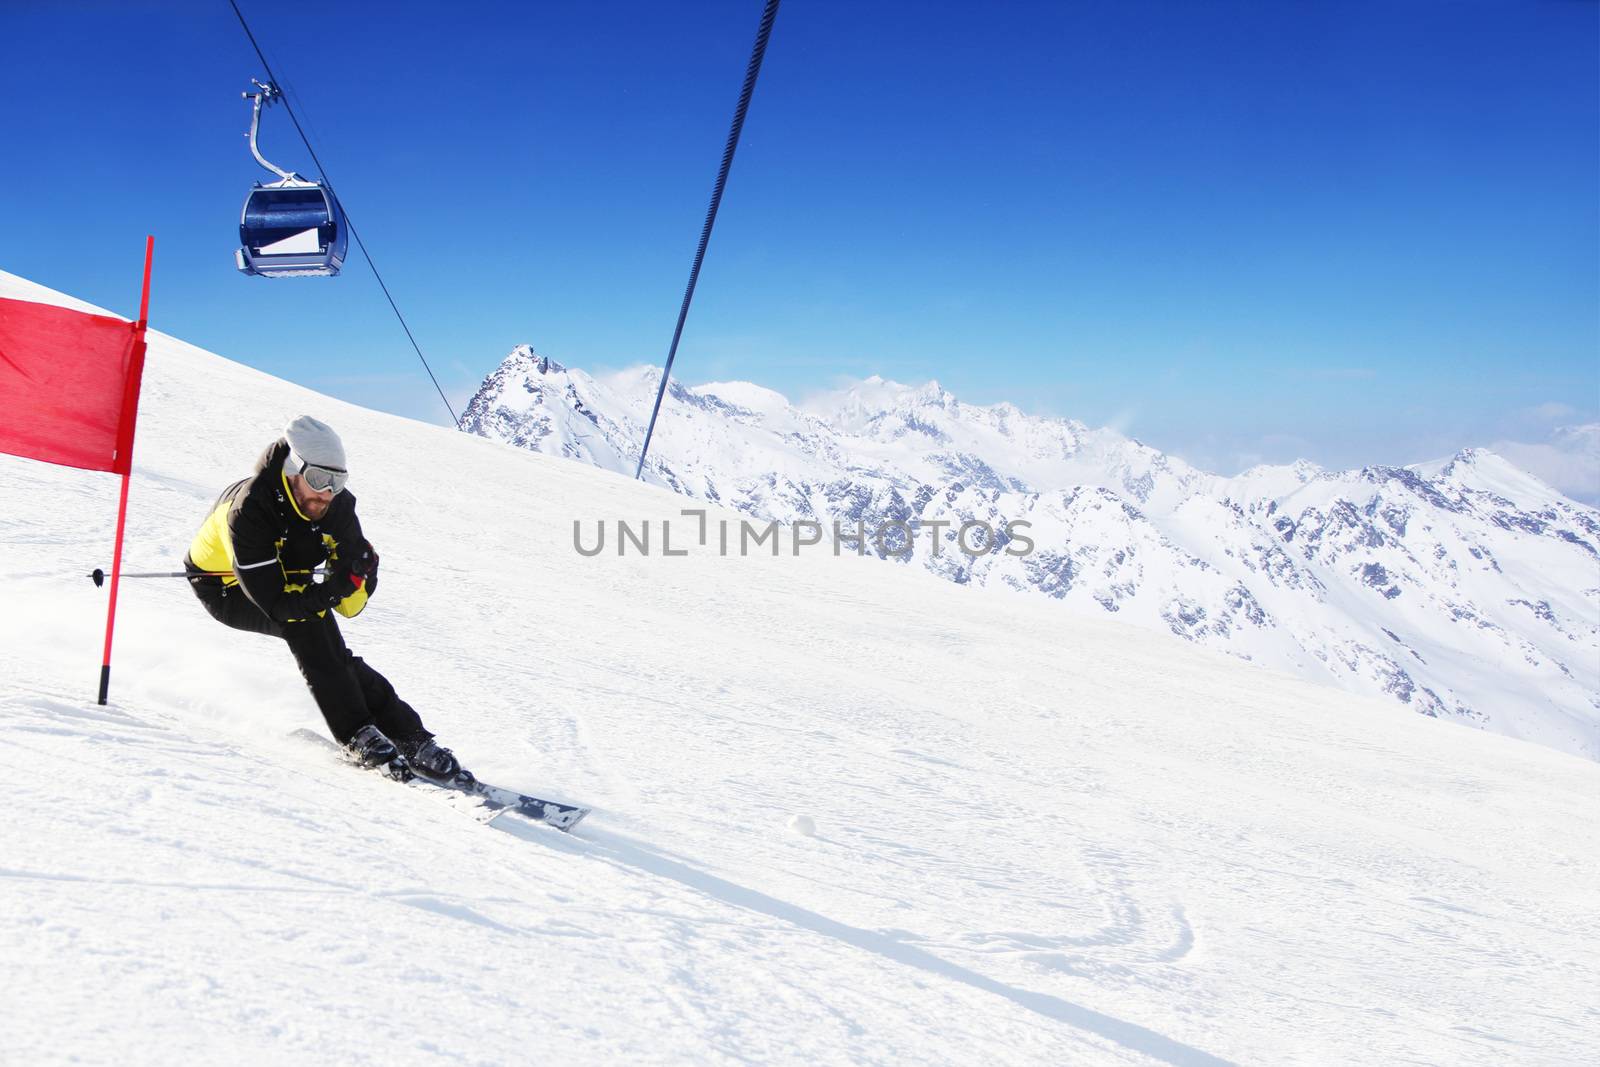 Giant Slalom ski racer skiing downhill in high mountains, Solden, Austria